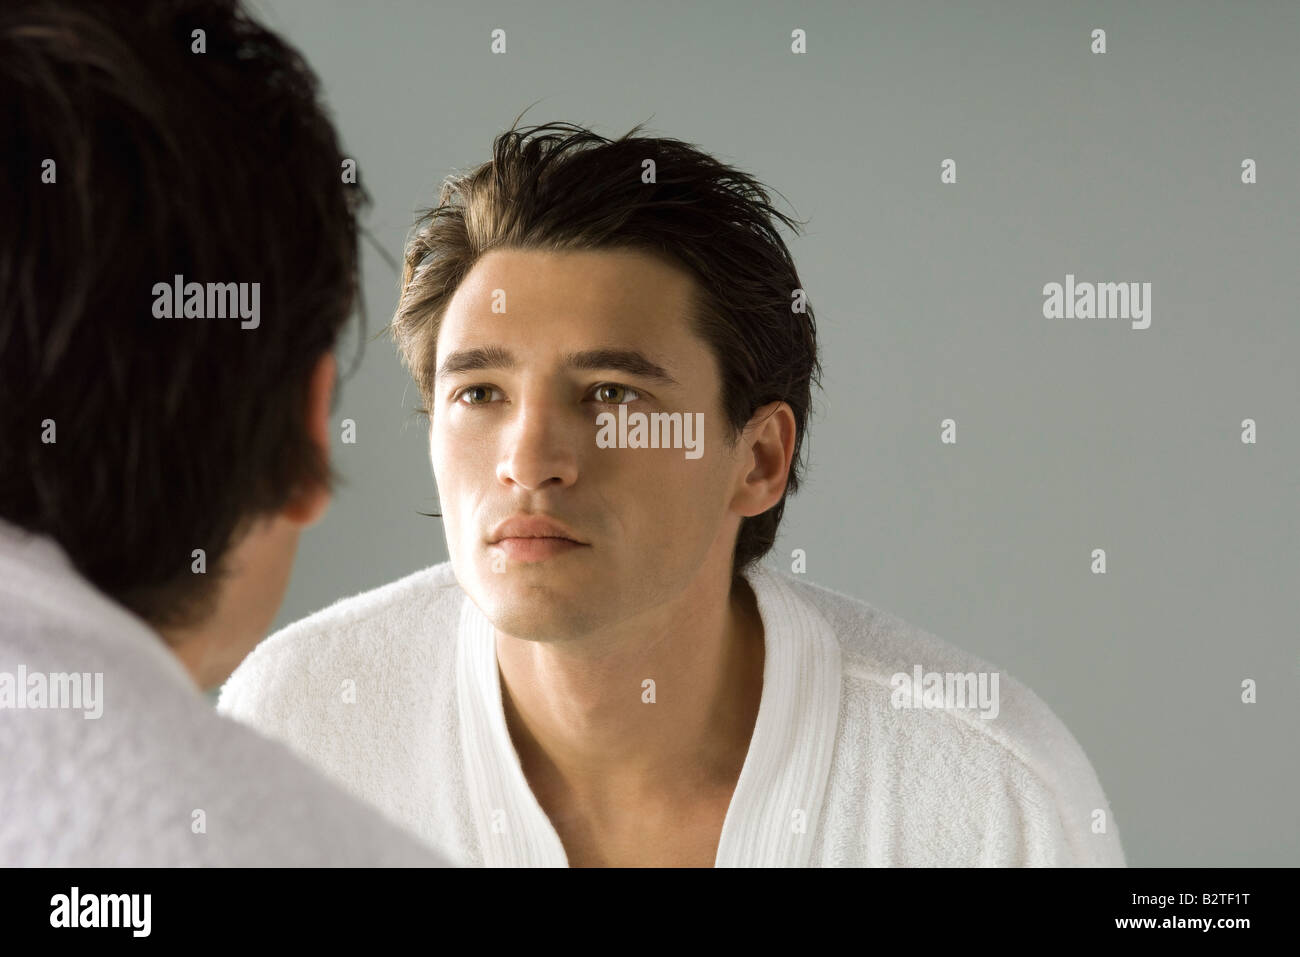 Man examining his face in the mirror, wearing bathrobe Stock Photo